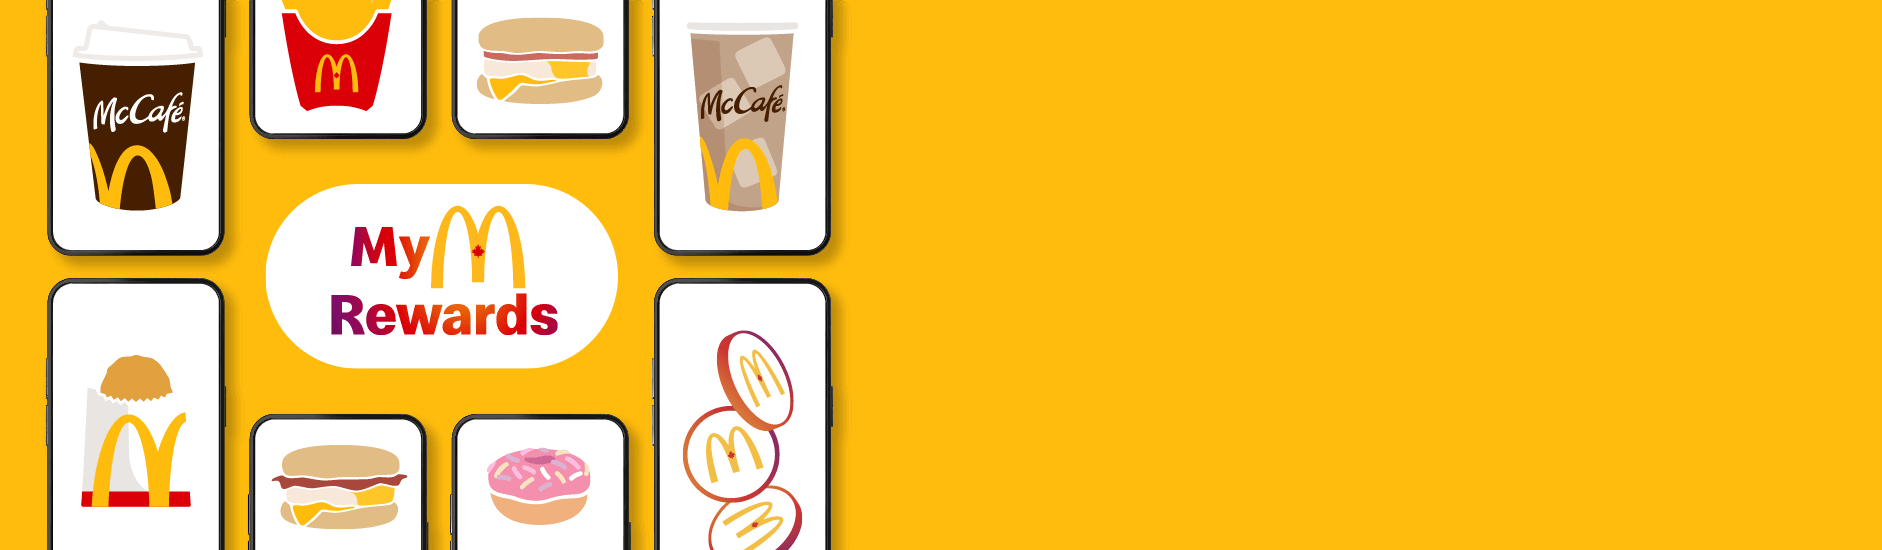 My McDonald's Rewards